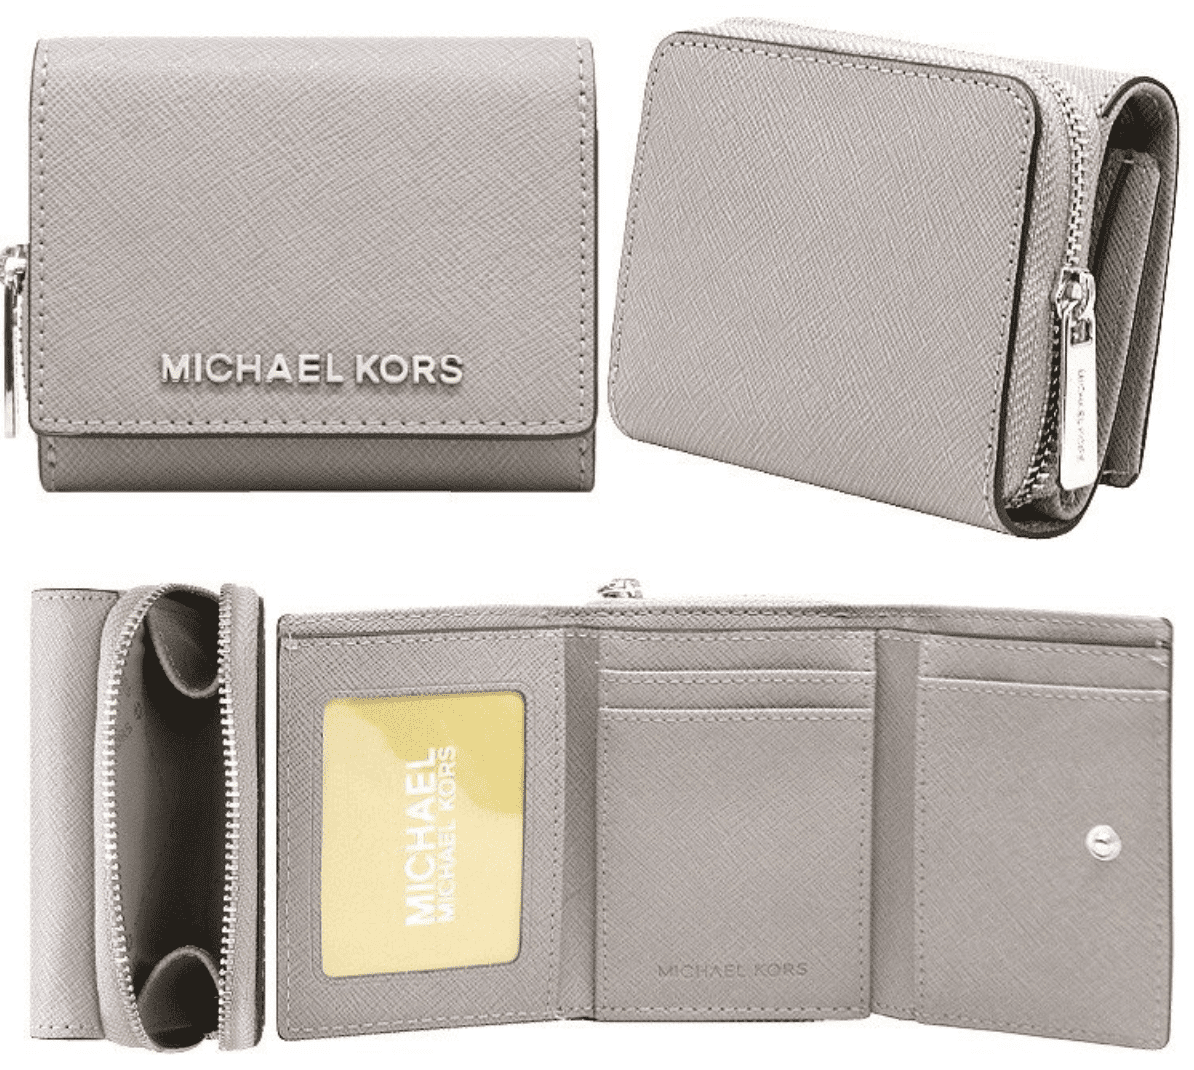 michael kors pearl gray wallet